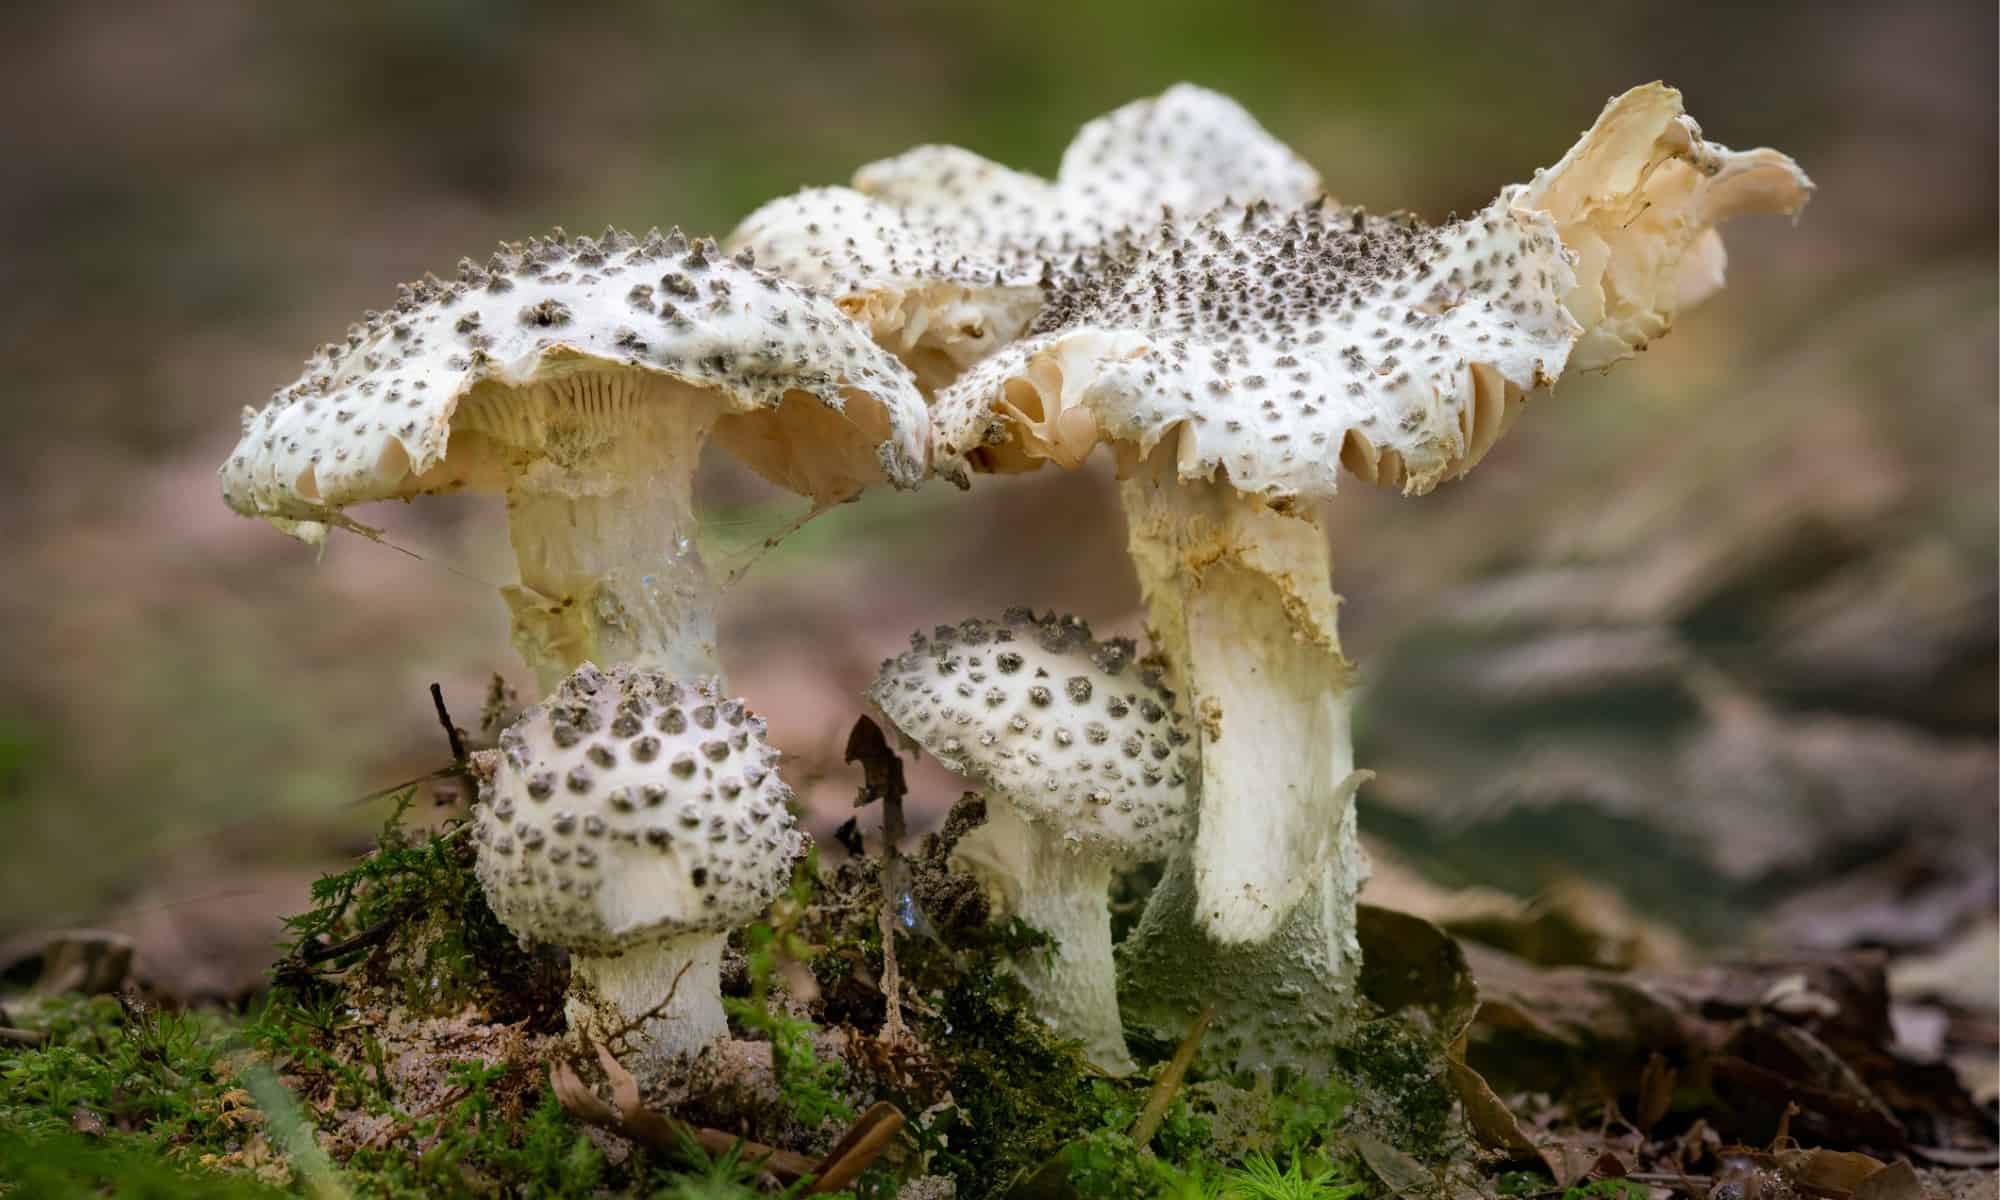 Poisonous Mushrooms